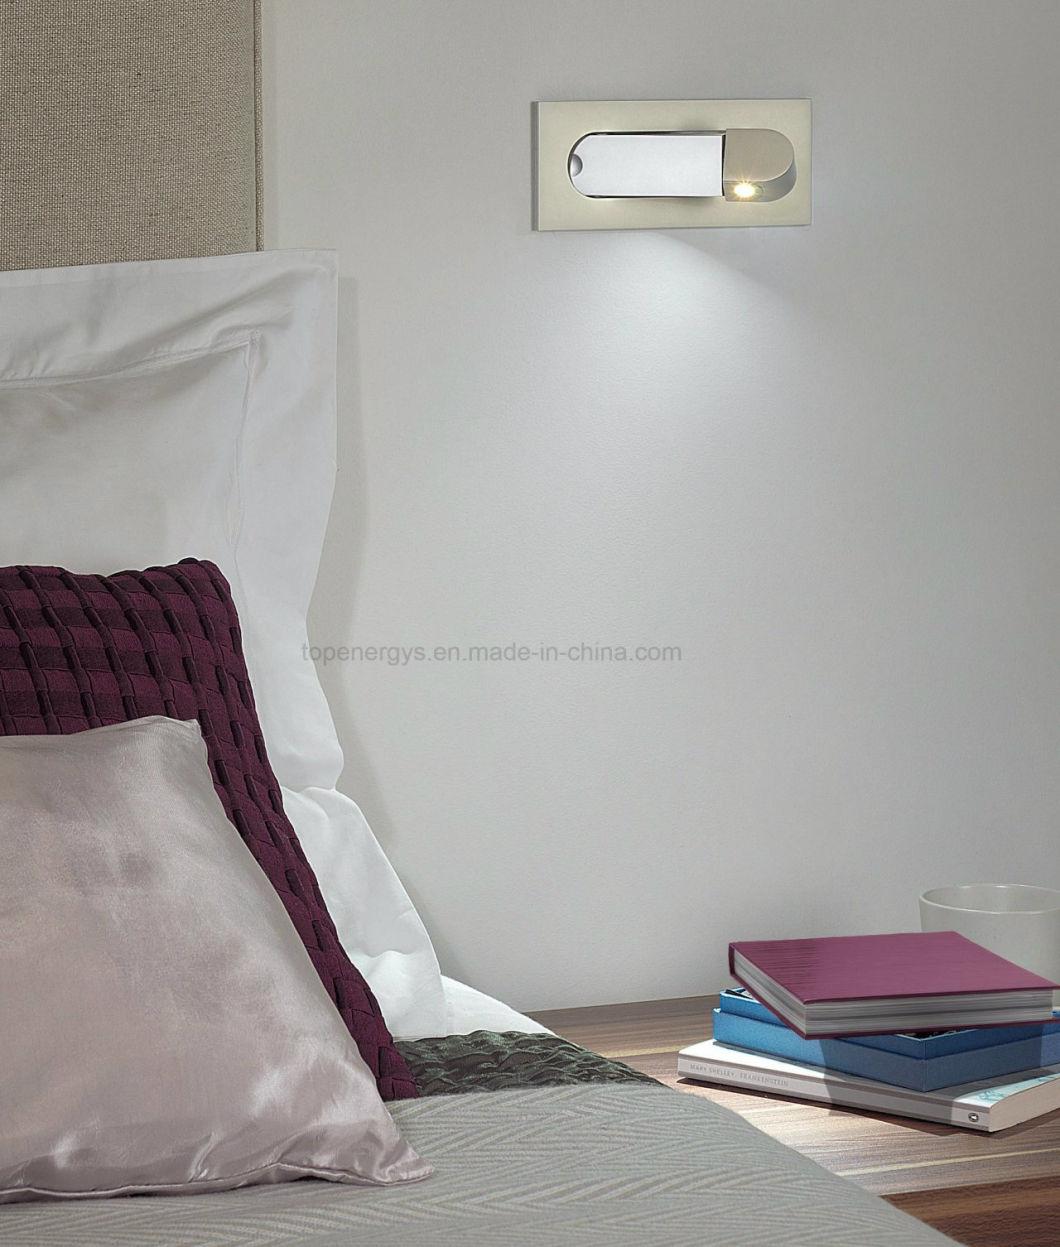 Rotatable LED Wall Lamp Bh-007 Decorative Adjustable Headboard Light Hotel Bedside Reading Light